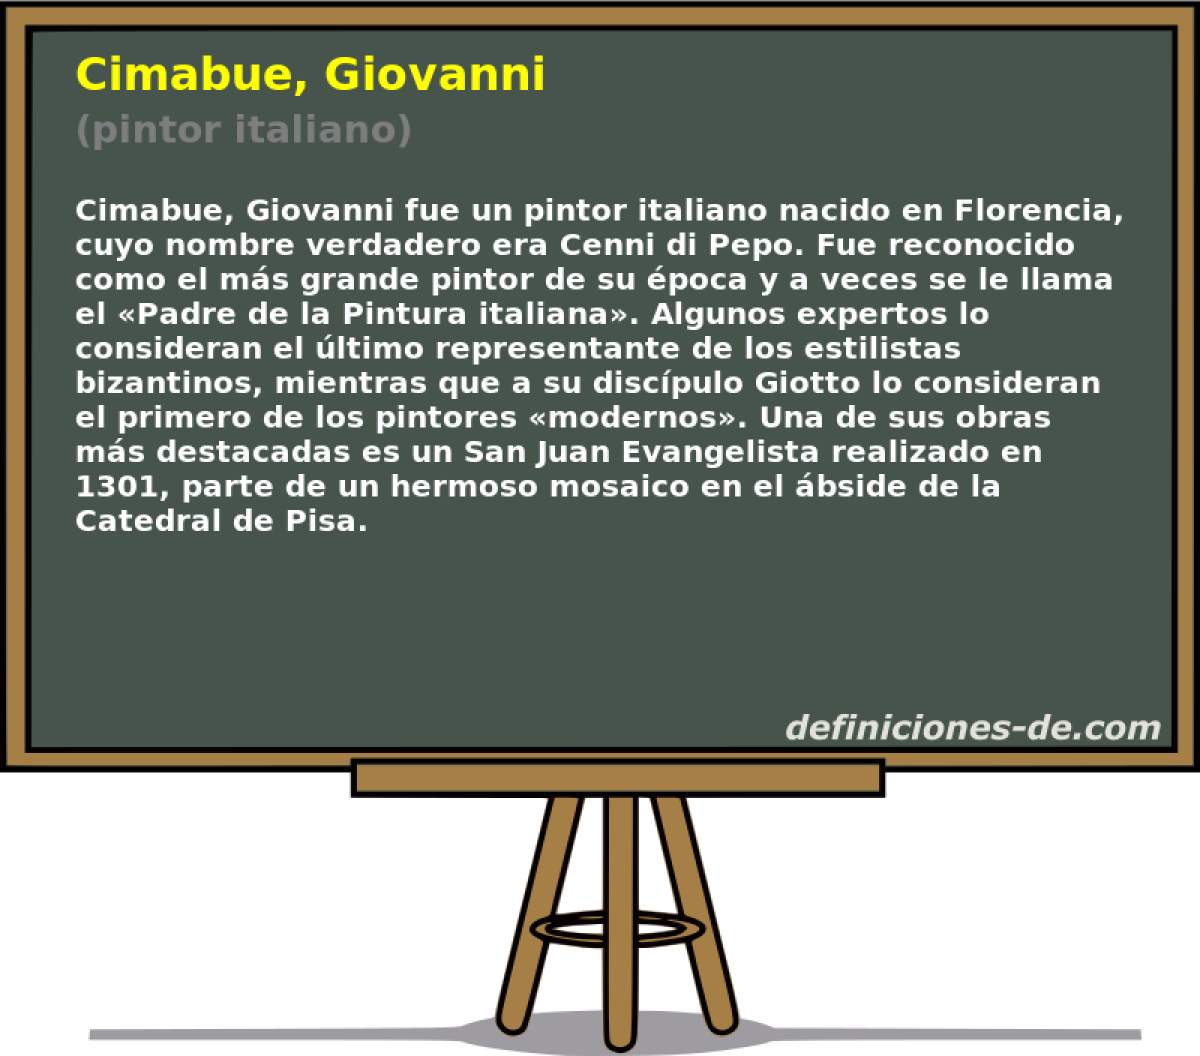 Cimabue, Giovanni (pintor italiano)